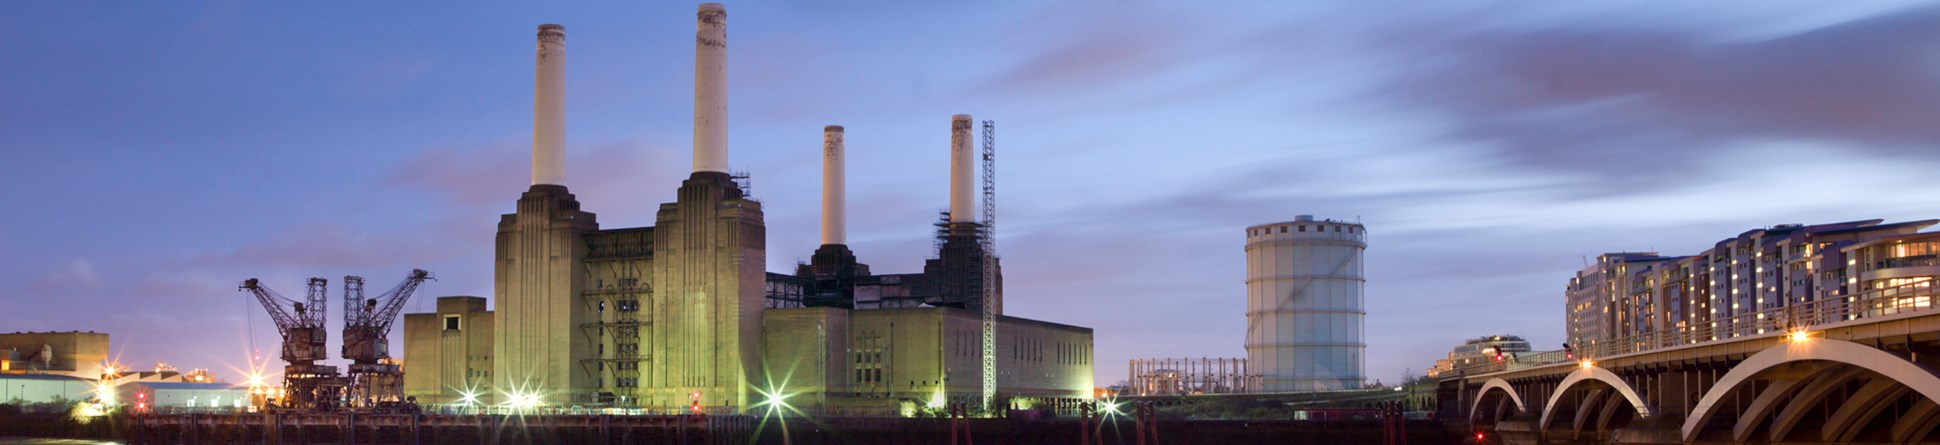 Colour photograph of Battersea Power Station 2013.